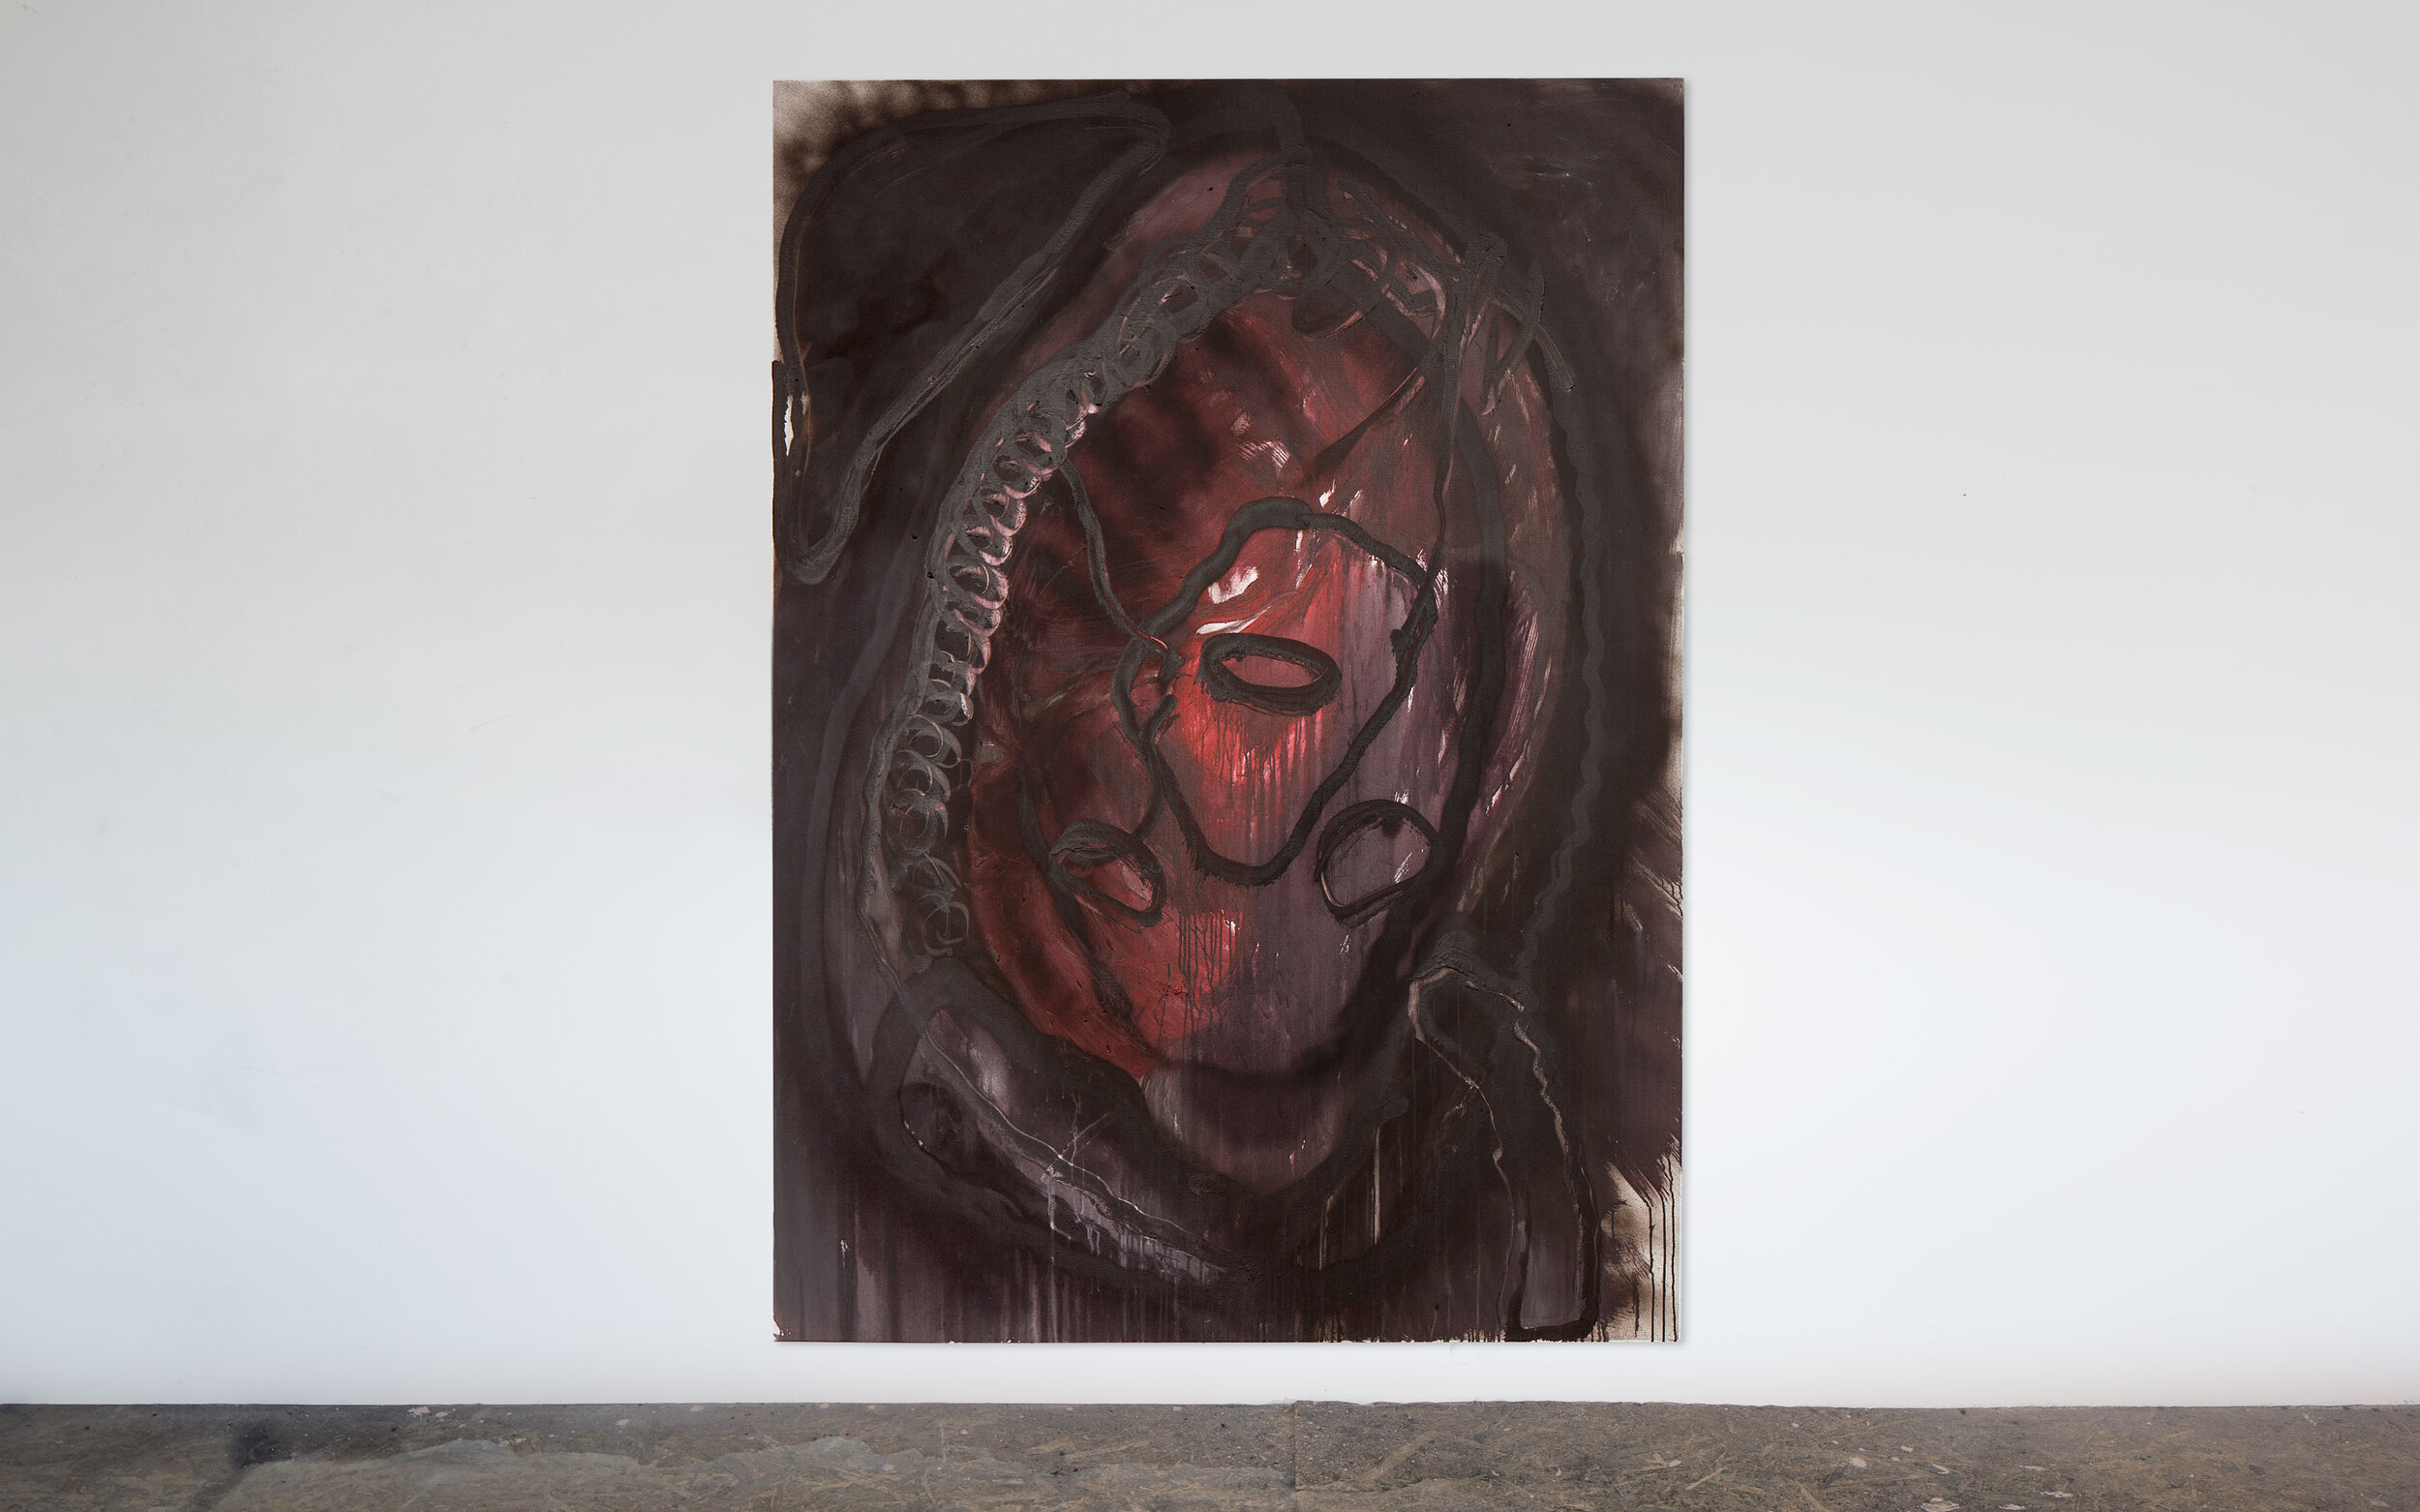  CORE, 210 x 150 x 4 cm, 2020, Acrylic and spray paint on canvas 